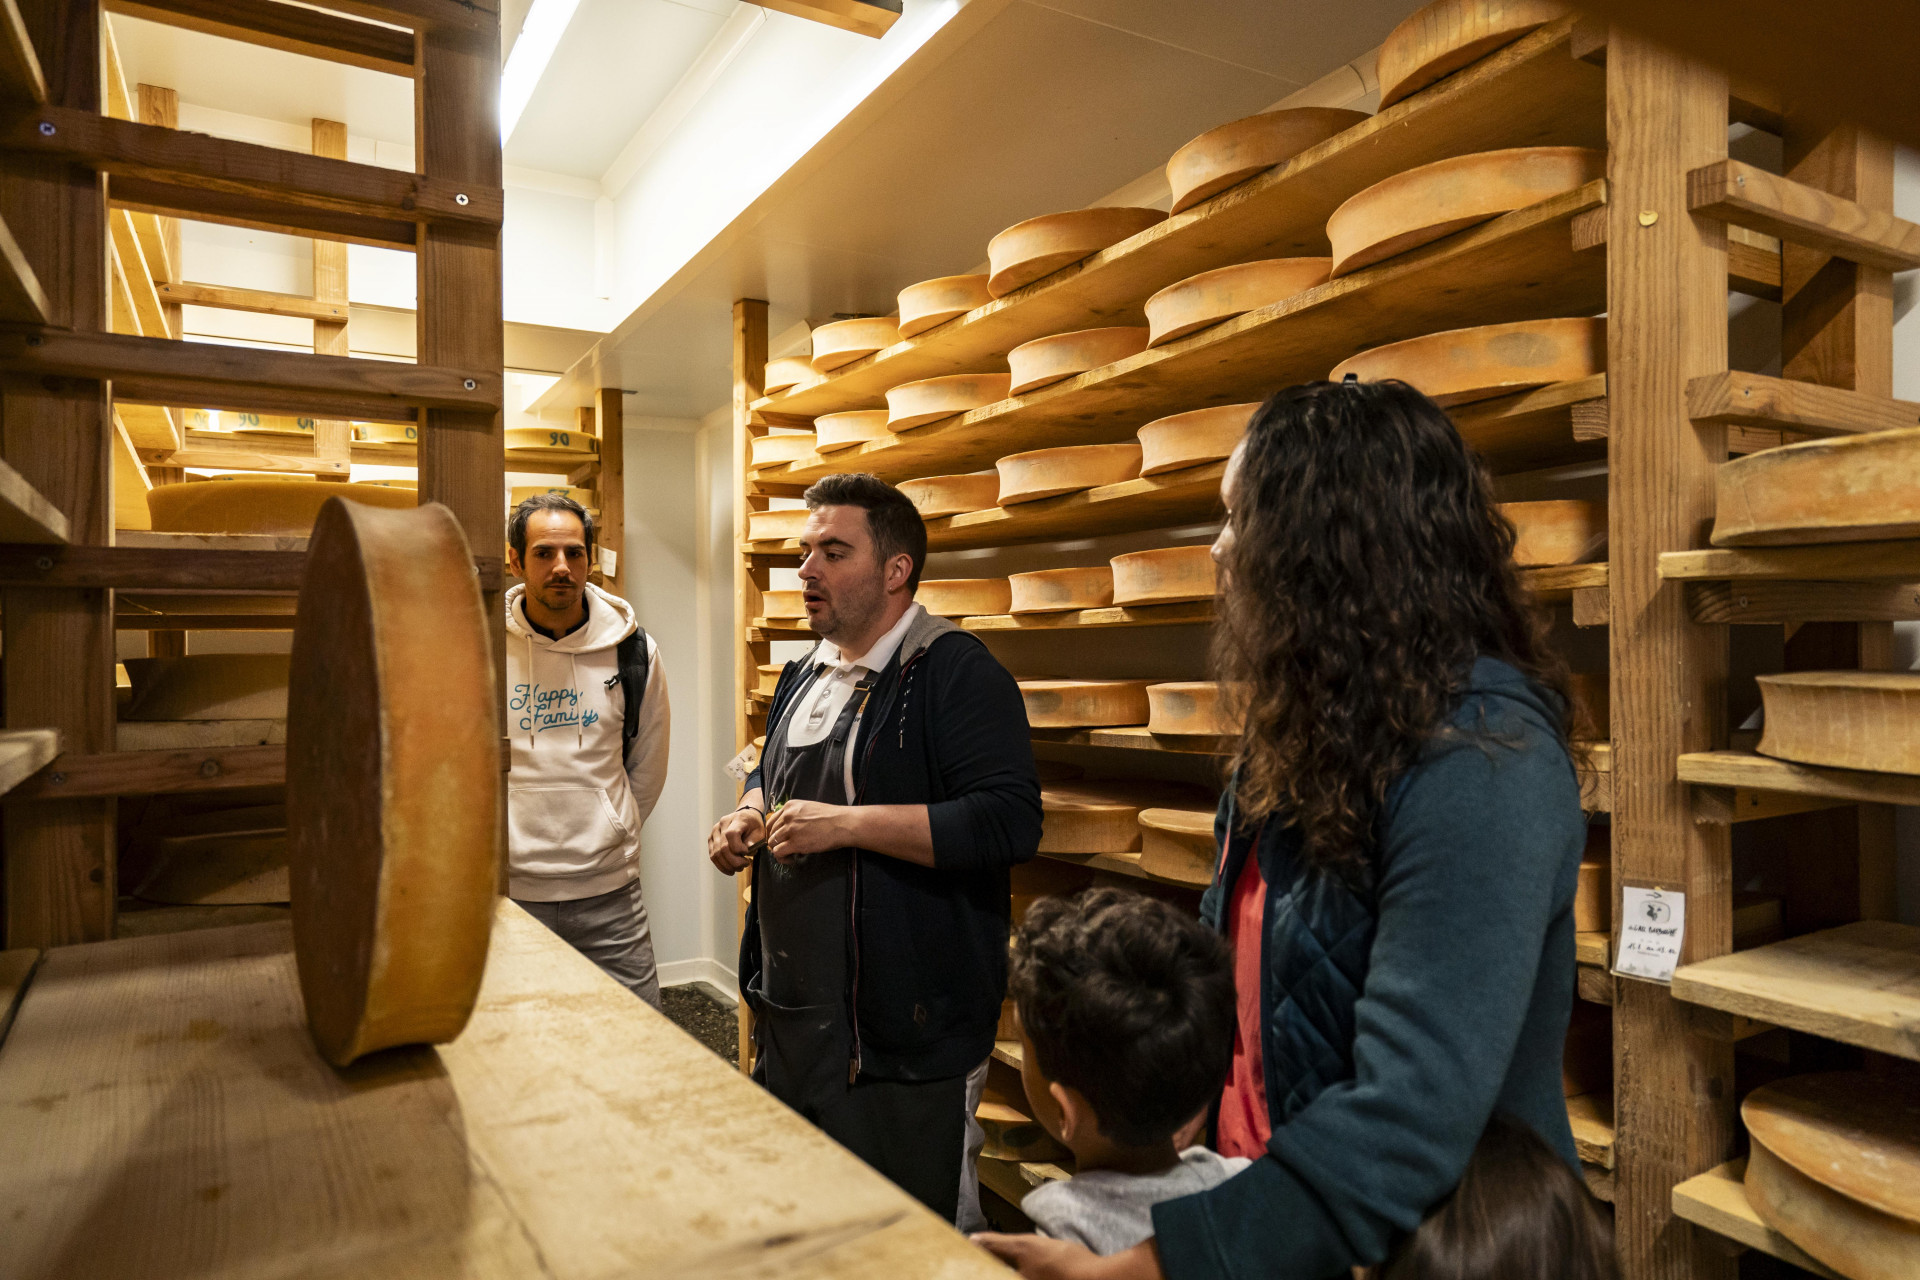 Visit to an Abondance cheese maturing cellar